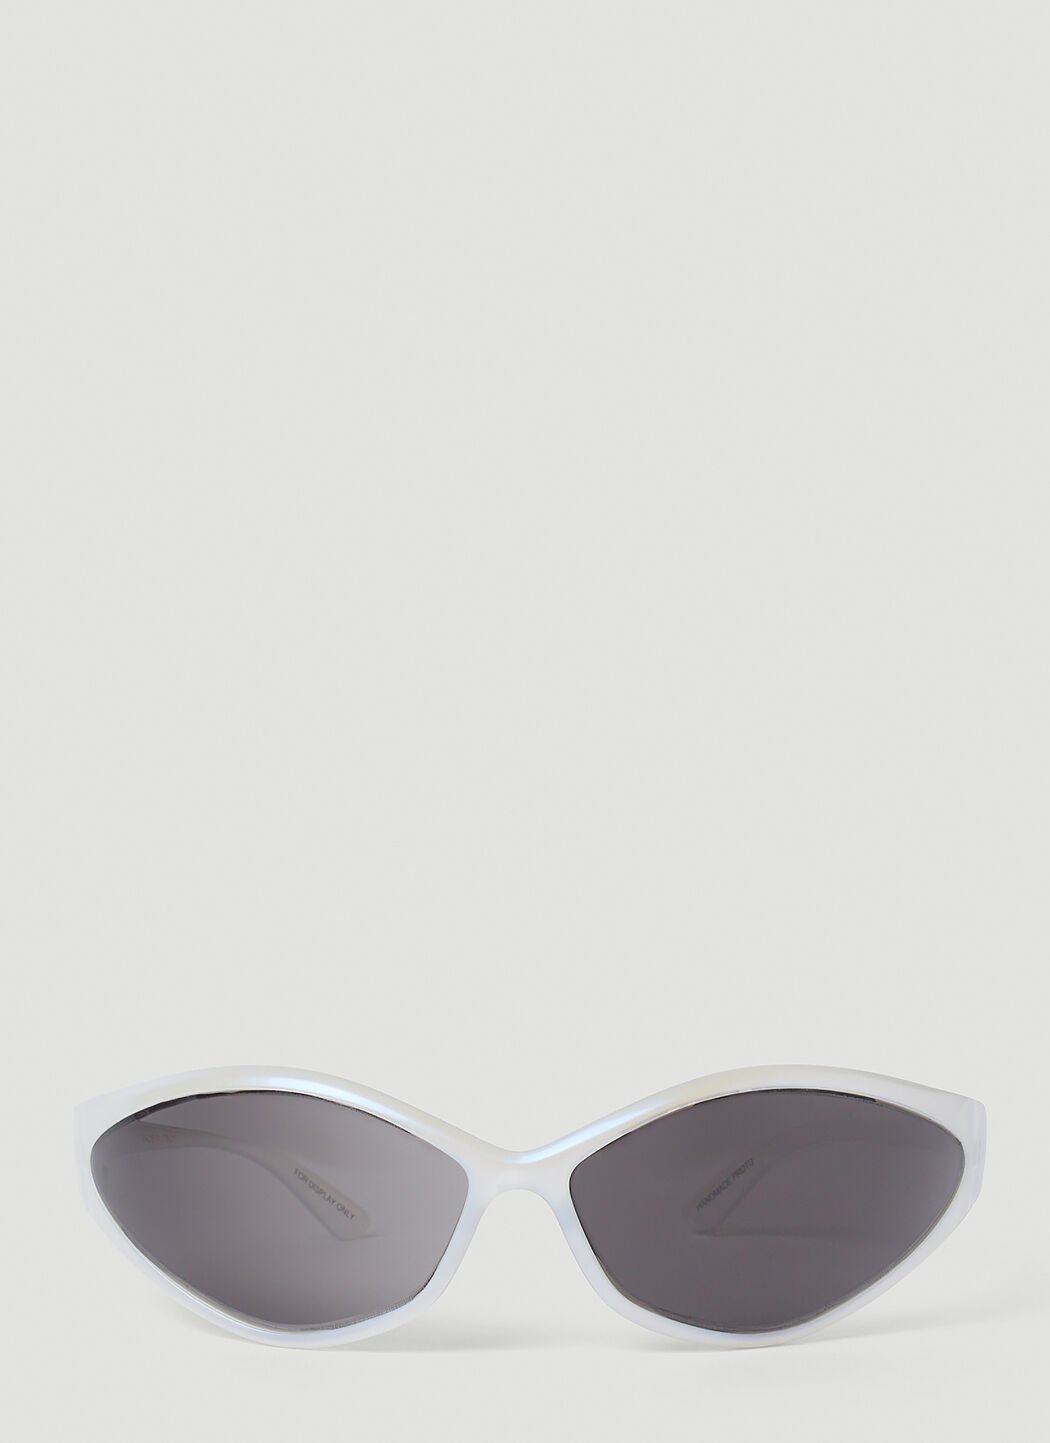 Marc Jacobs Swift Oval Sunglasses Silver mcj0255006